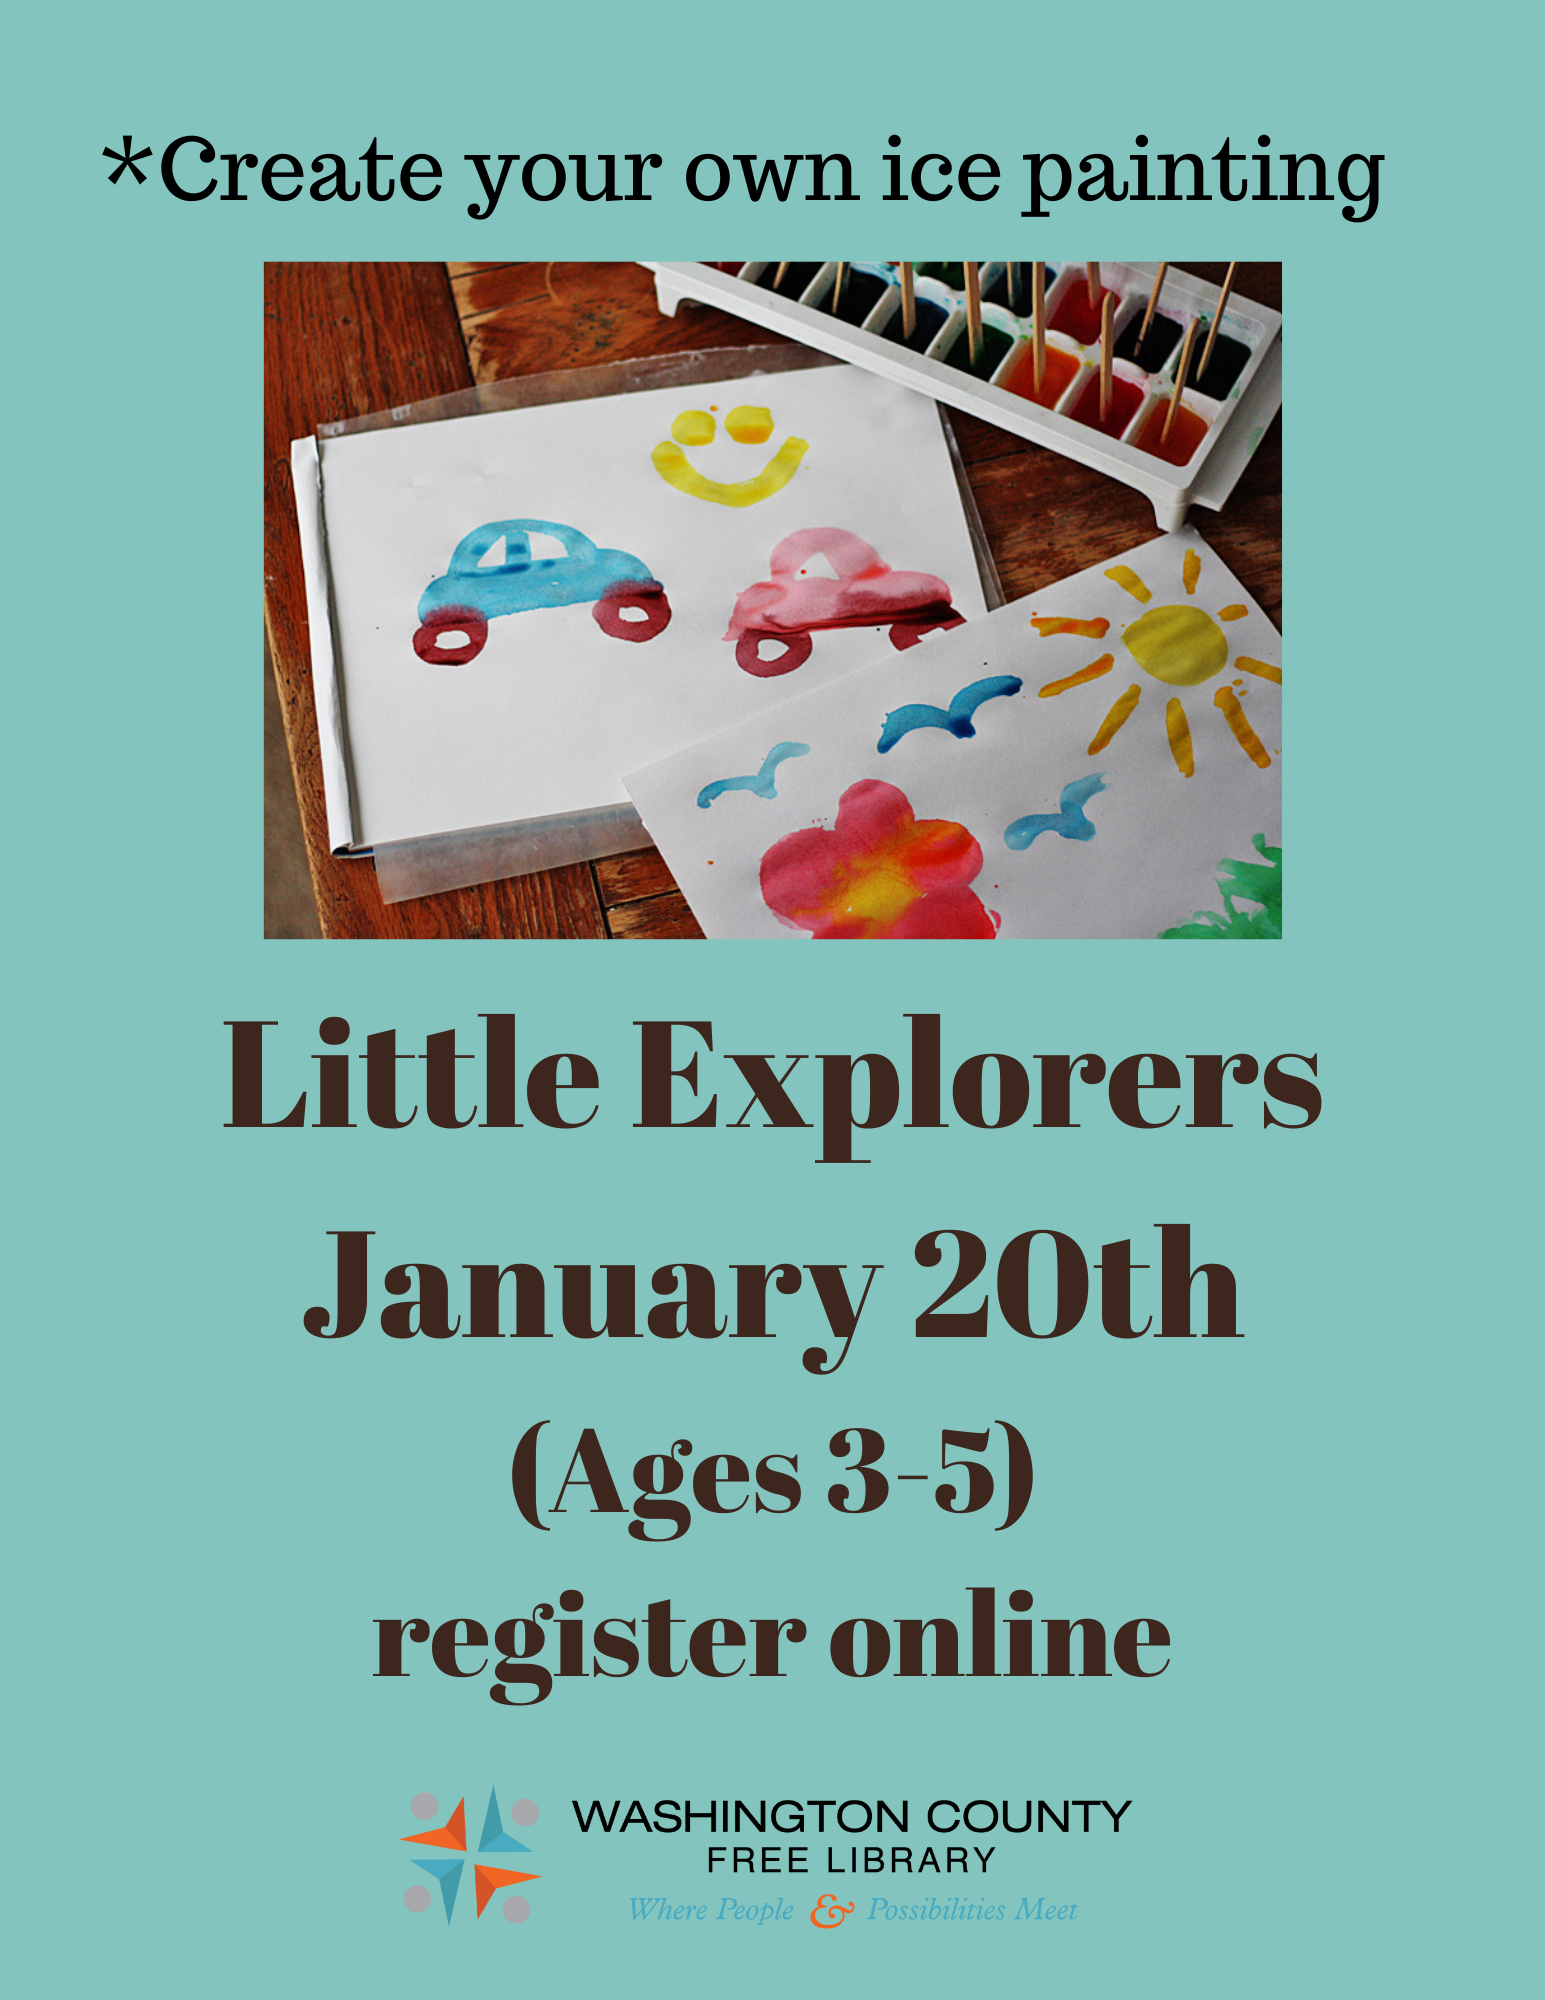 Little Explorers: Ice Painting